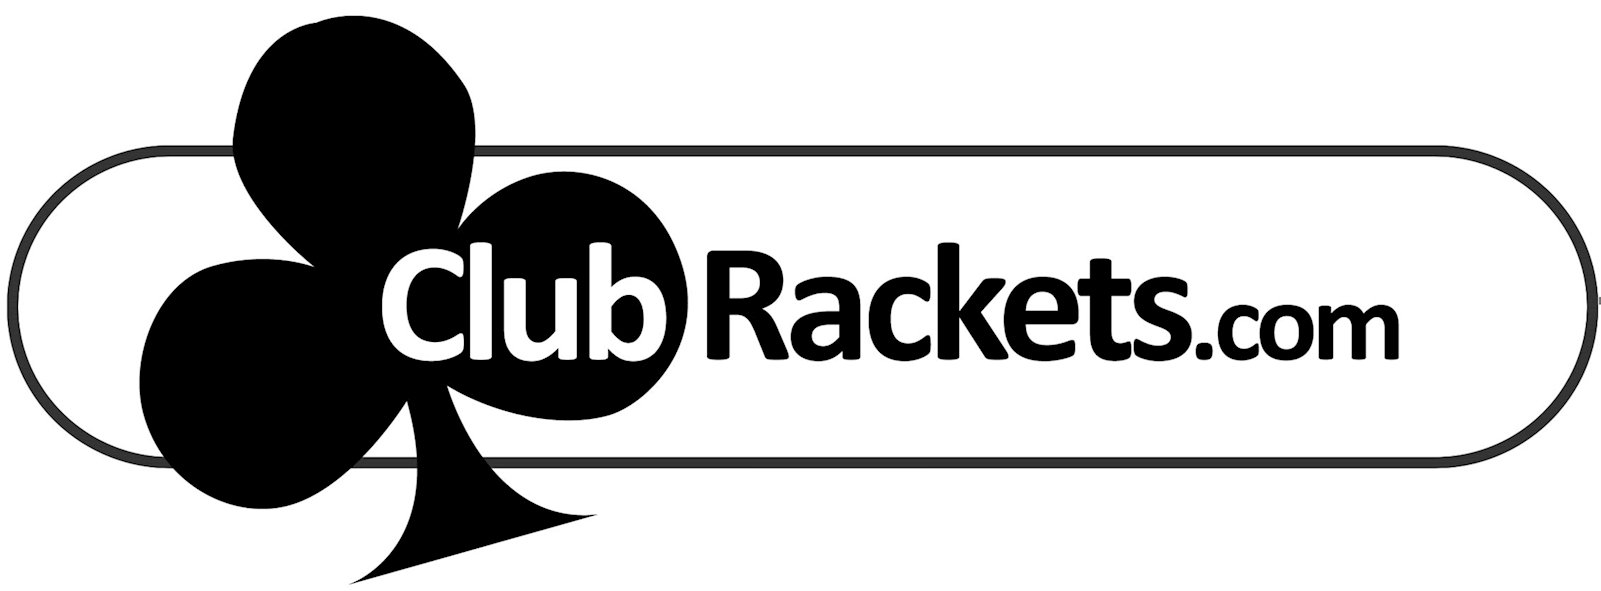 Club Rackets